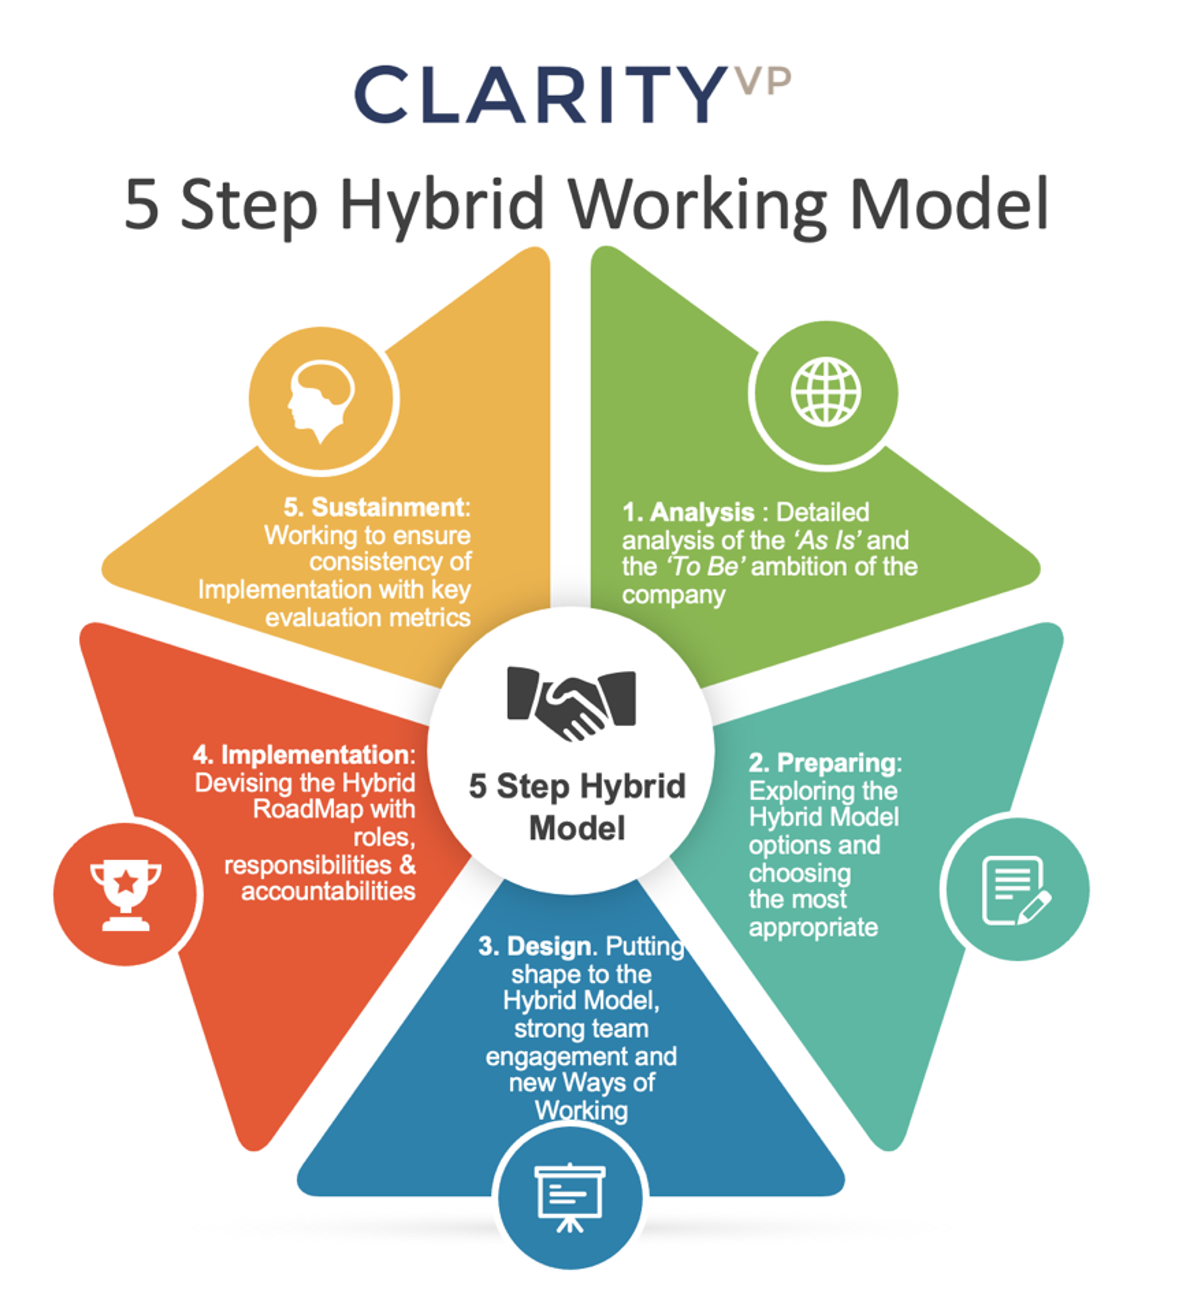 5 Step Hybrid Working Model